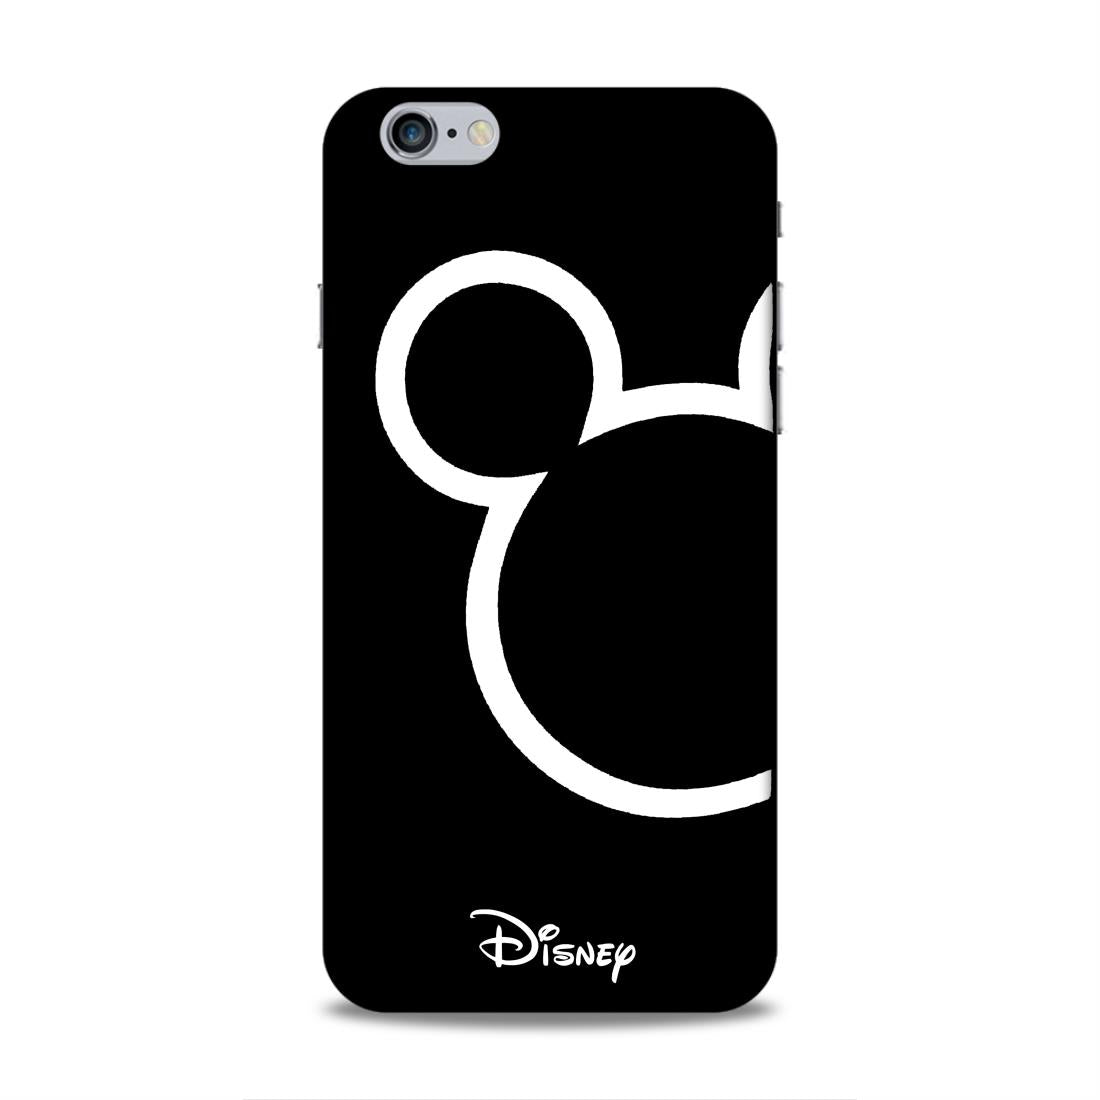 Disney Hard Back Case For Apple iPhone 6 Plus / 6s Plus